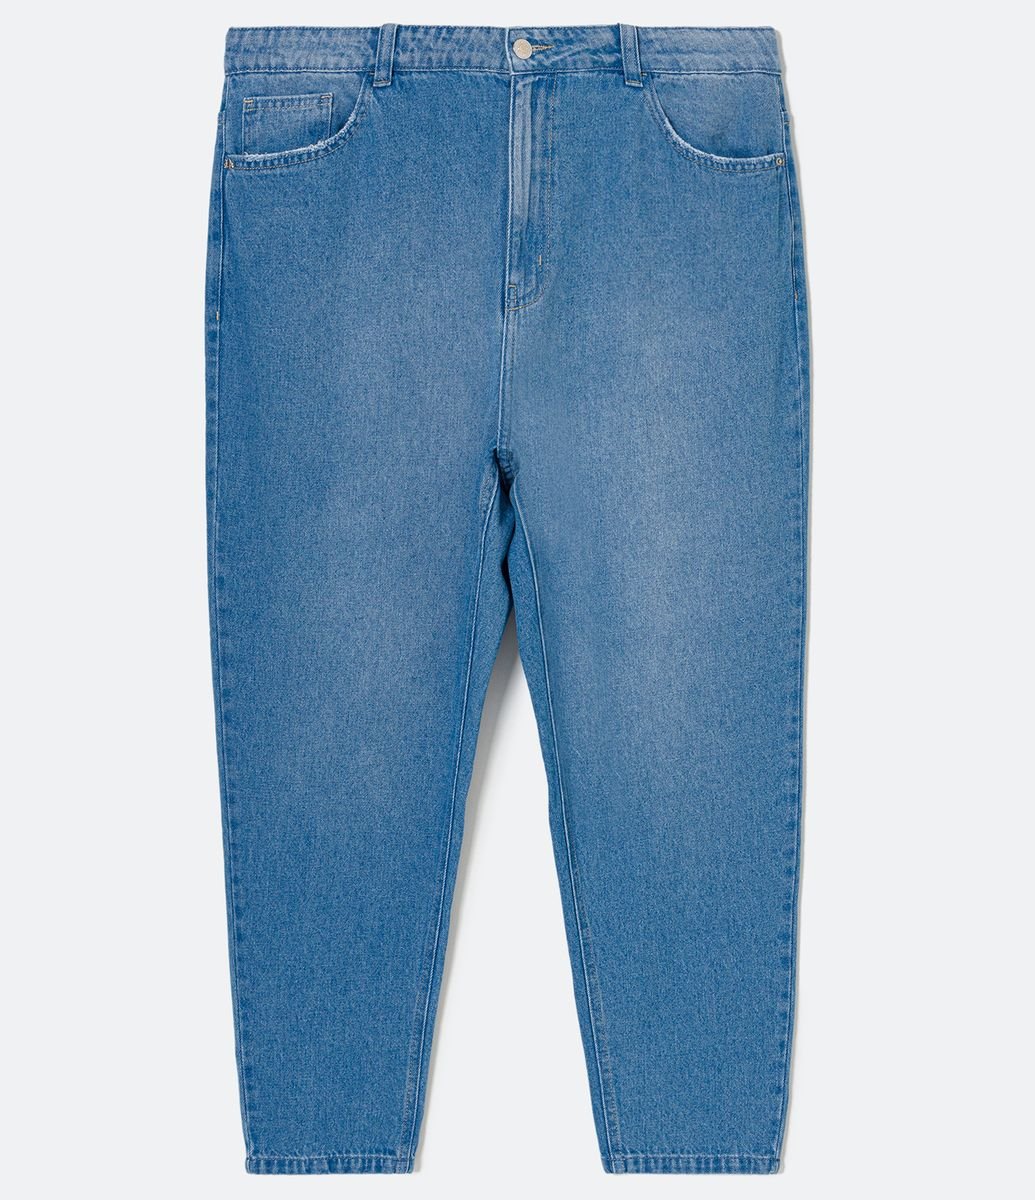 Calça MOM jeans plus size azul tradicional - Vintage & Cats